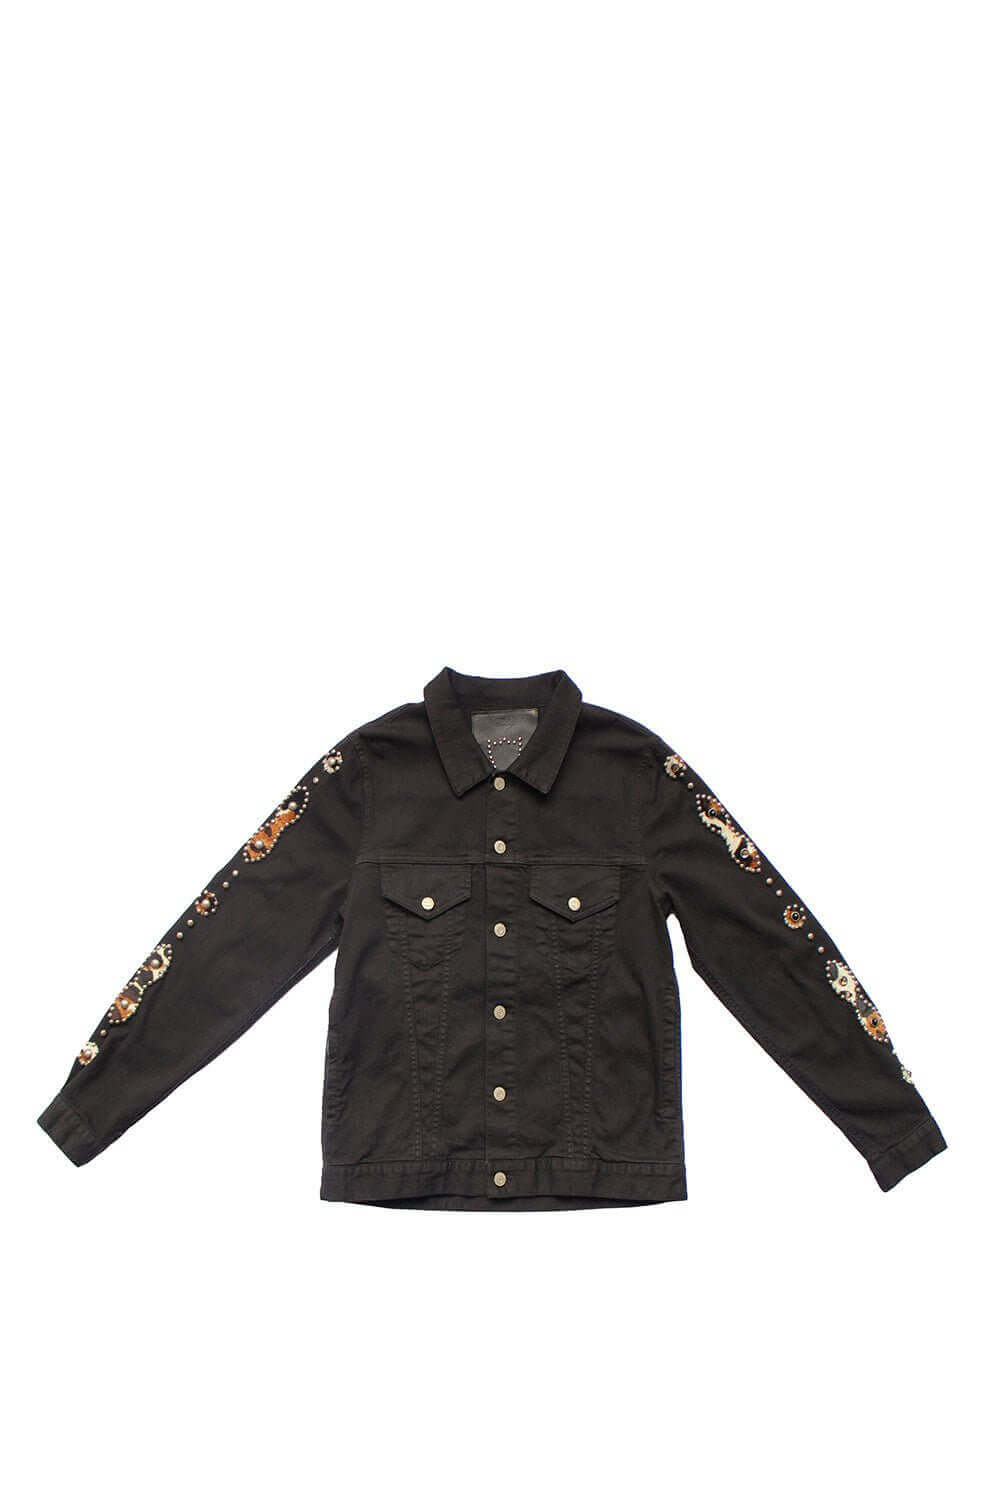 ENDENDALE BLACK DENIM JACKET Black denim studded jacket, button closure. 100% cotton. Made in Italy. HTC LOS ANGELES